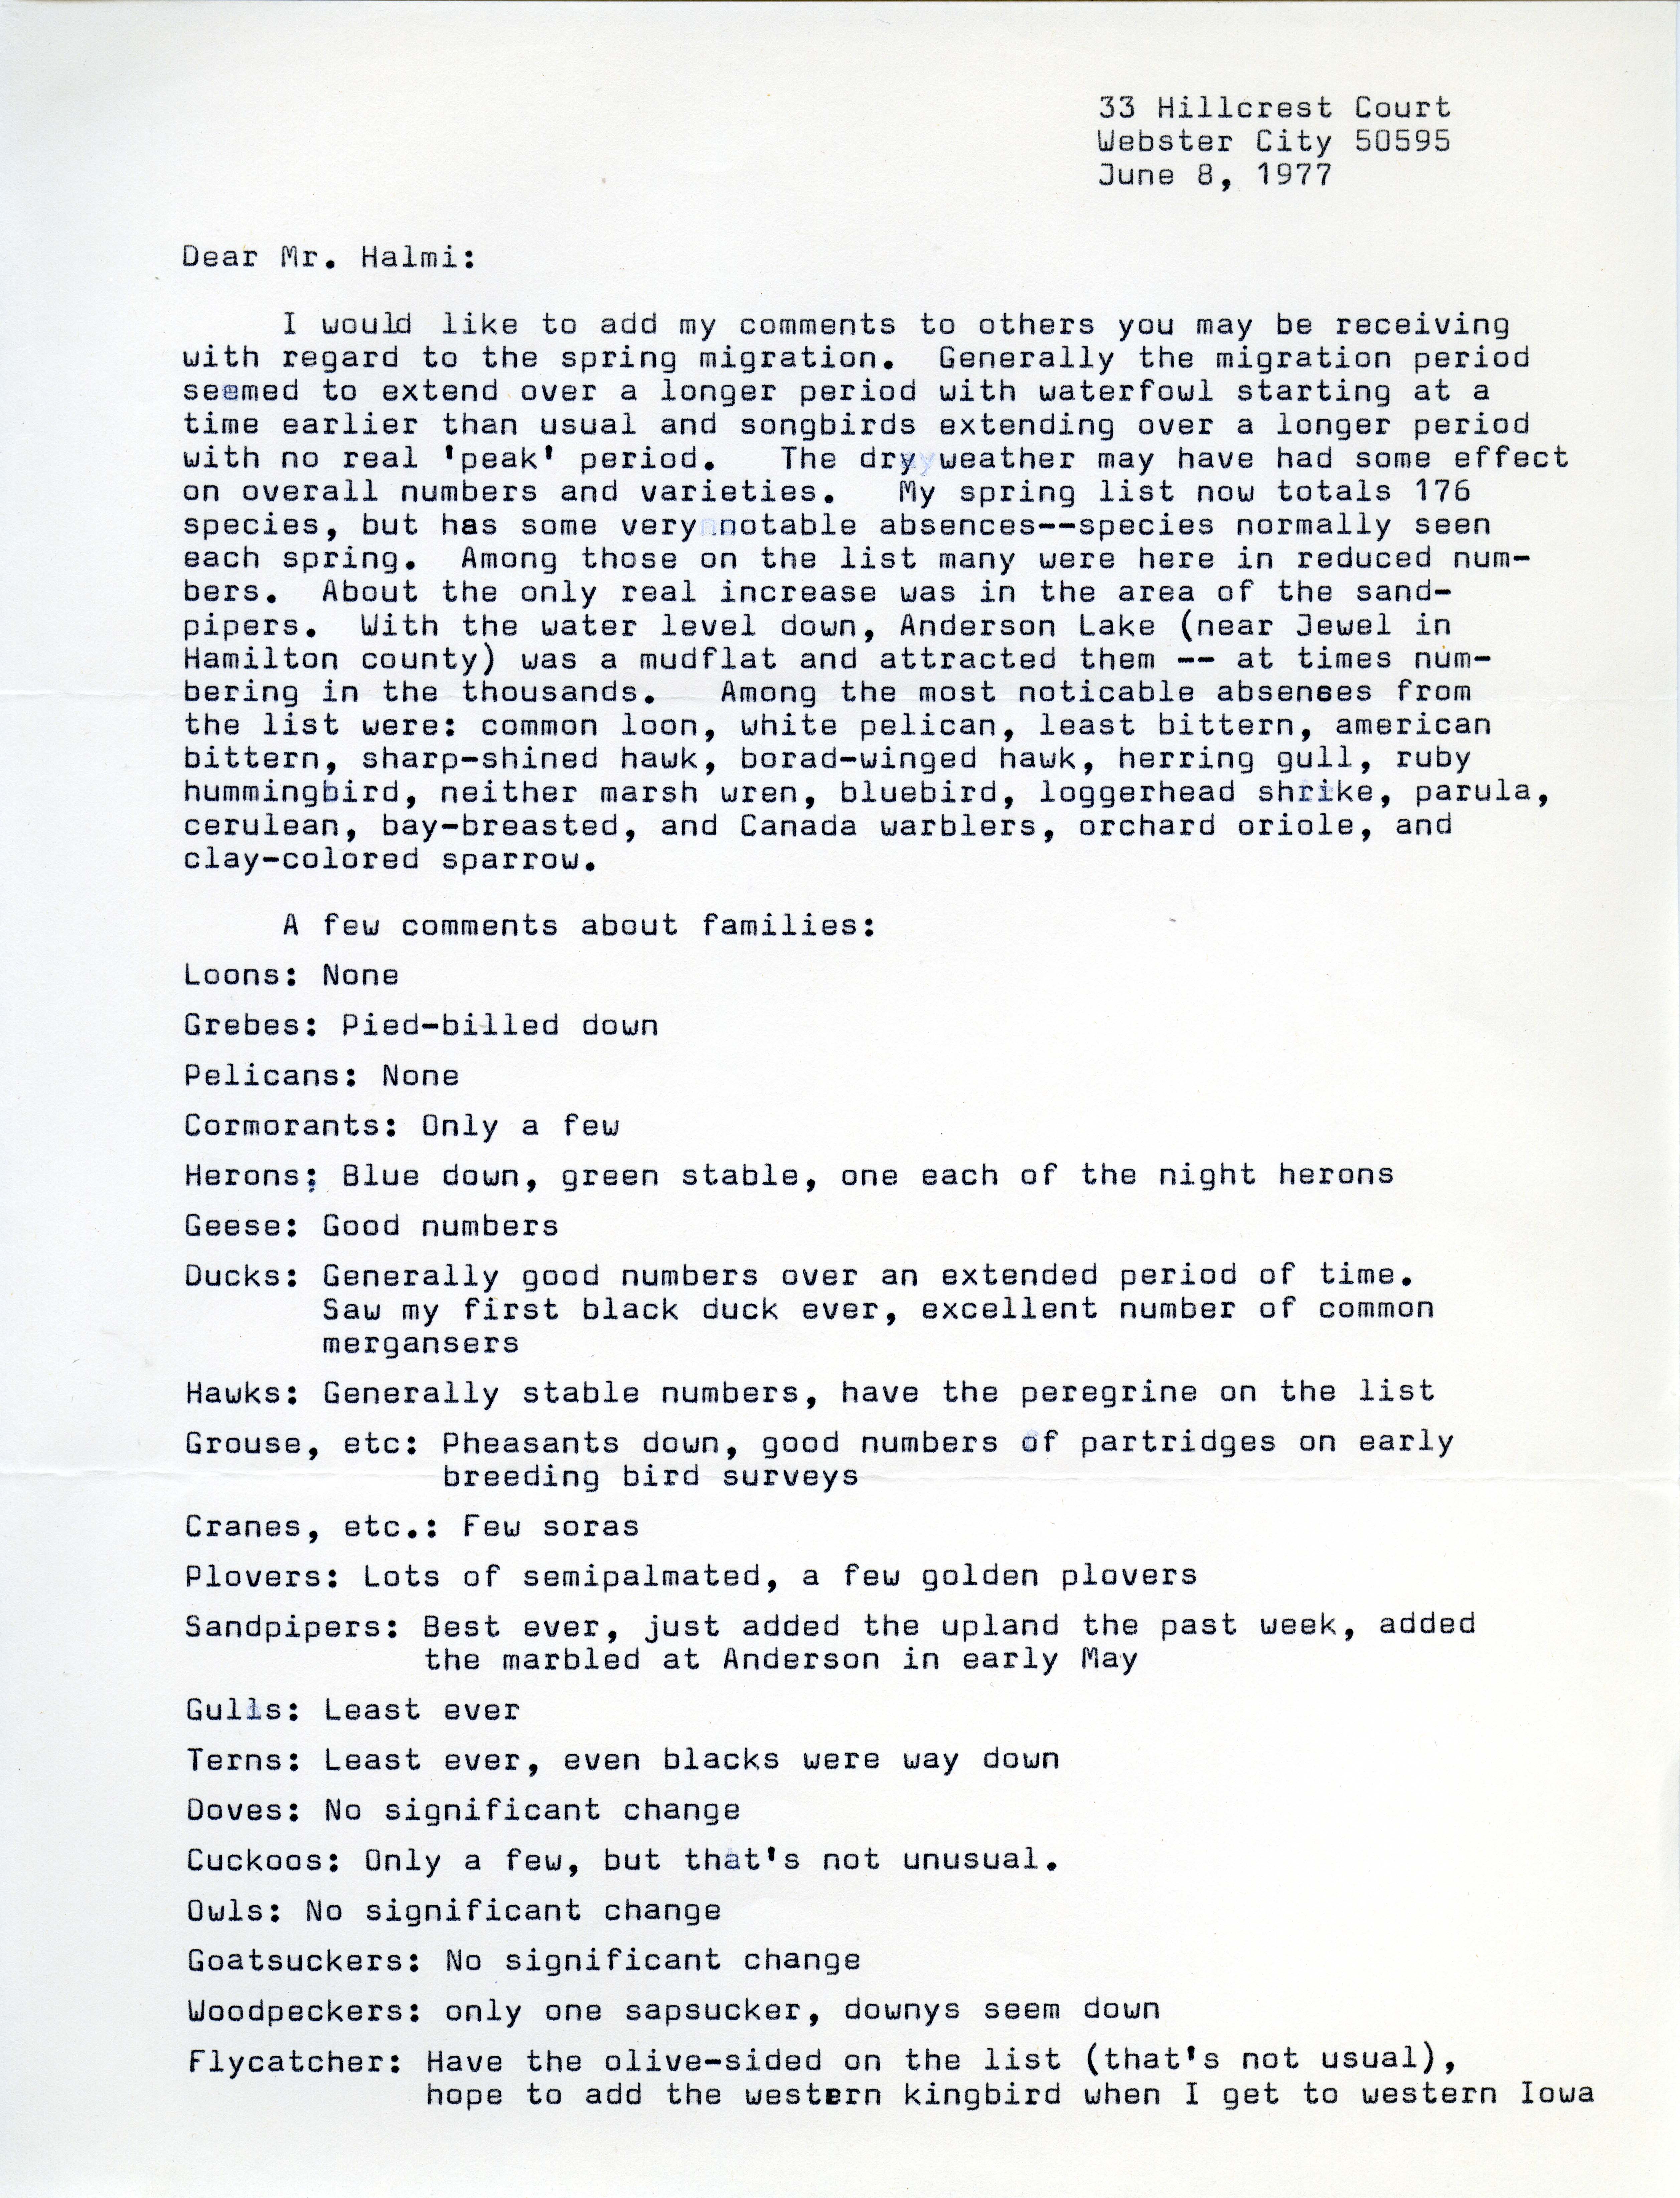 Ron Muilenburg letter to Nicholas S. Halmi regarding bird sightings, June 8, 1977